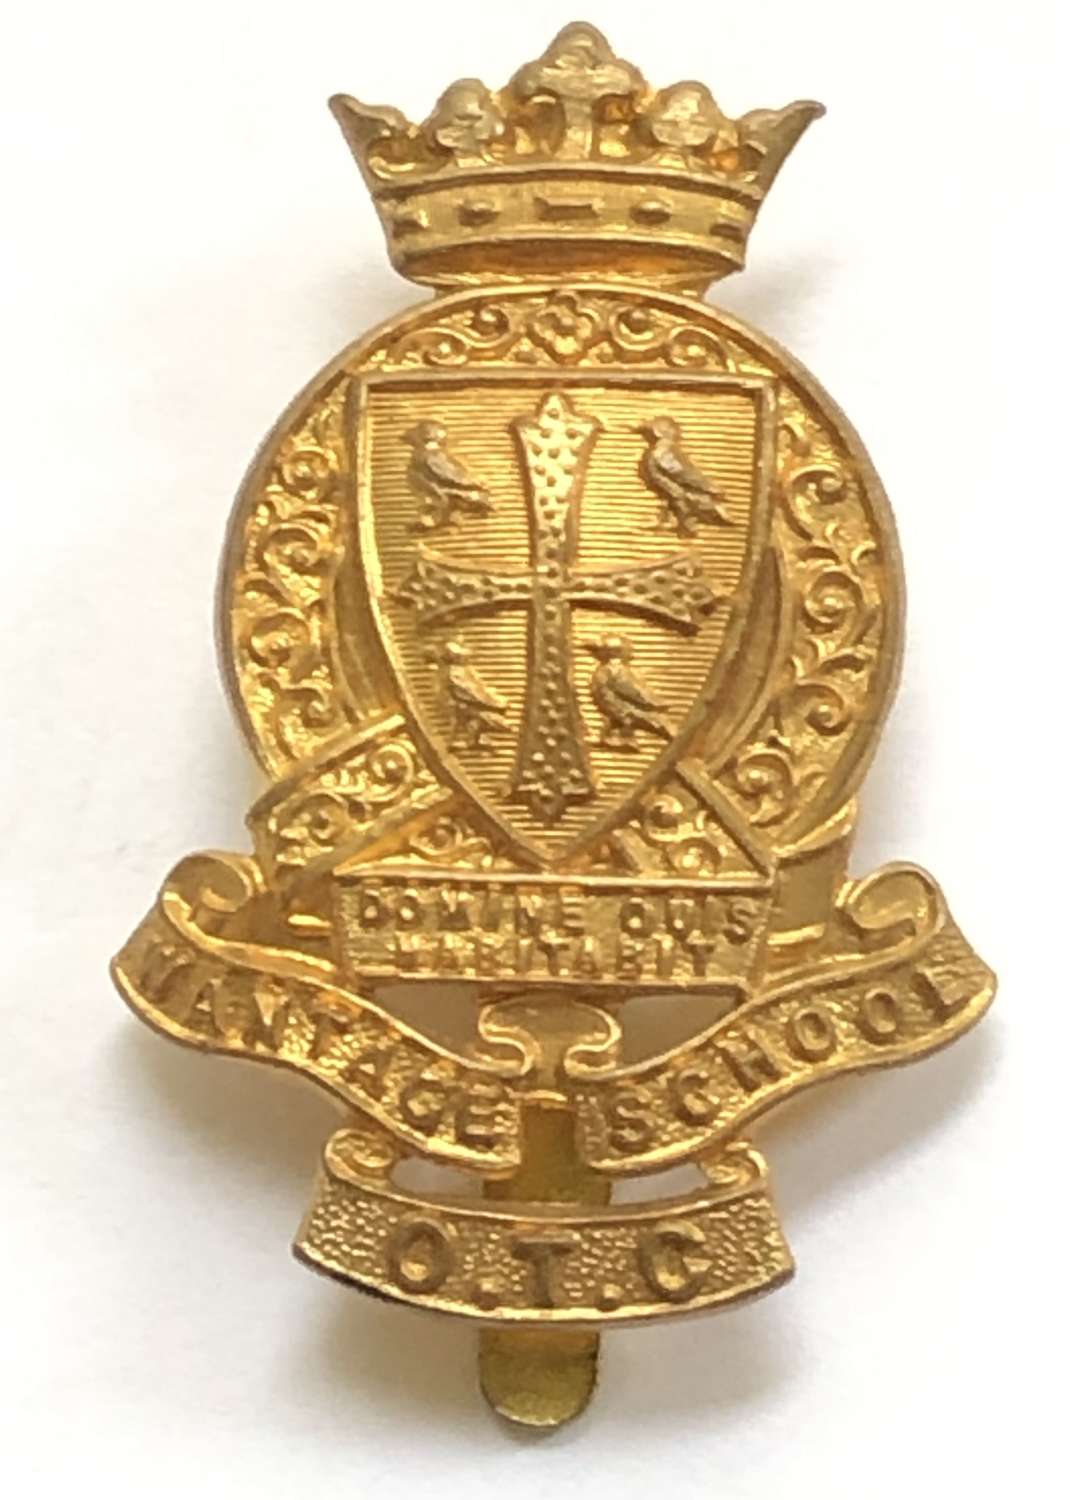 King Alfred’s School OTC, Wantage pre 1940 brass cap badge